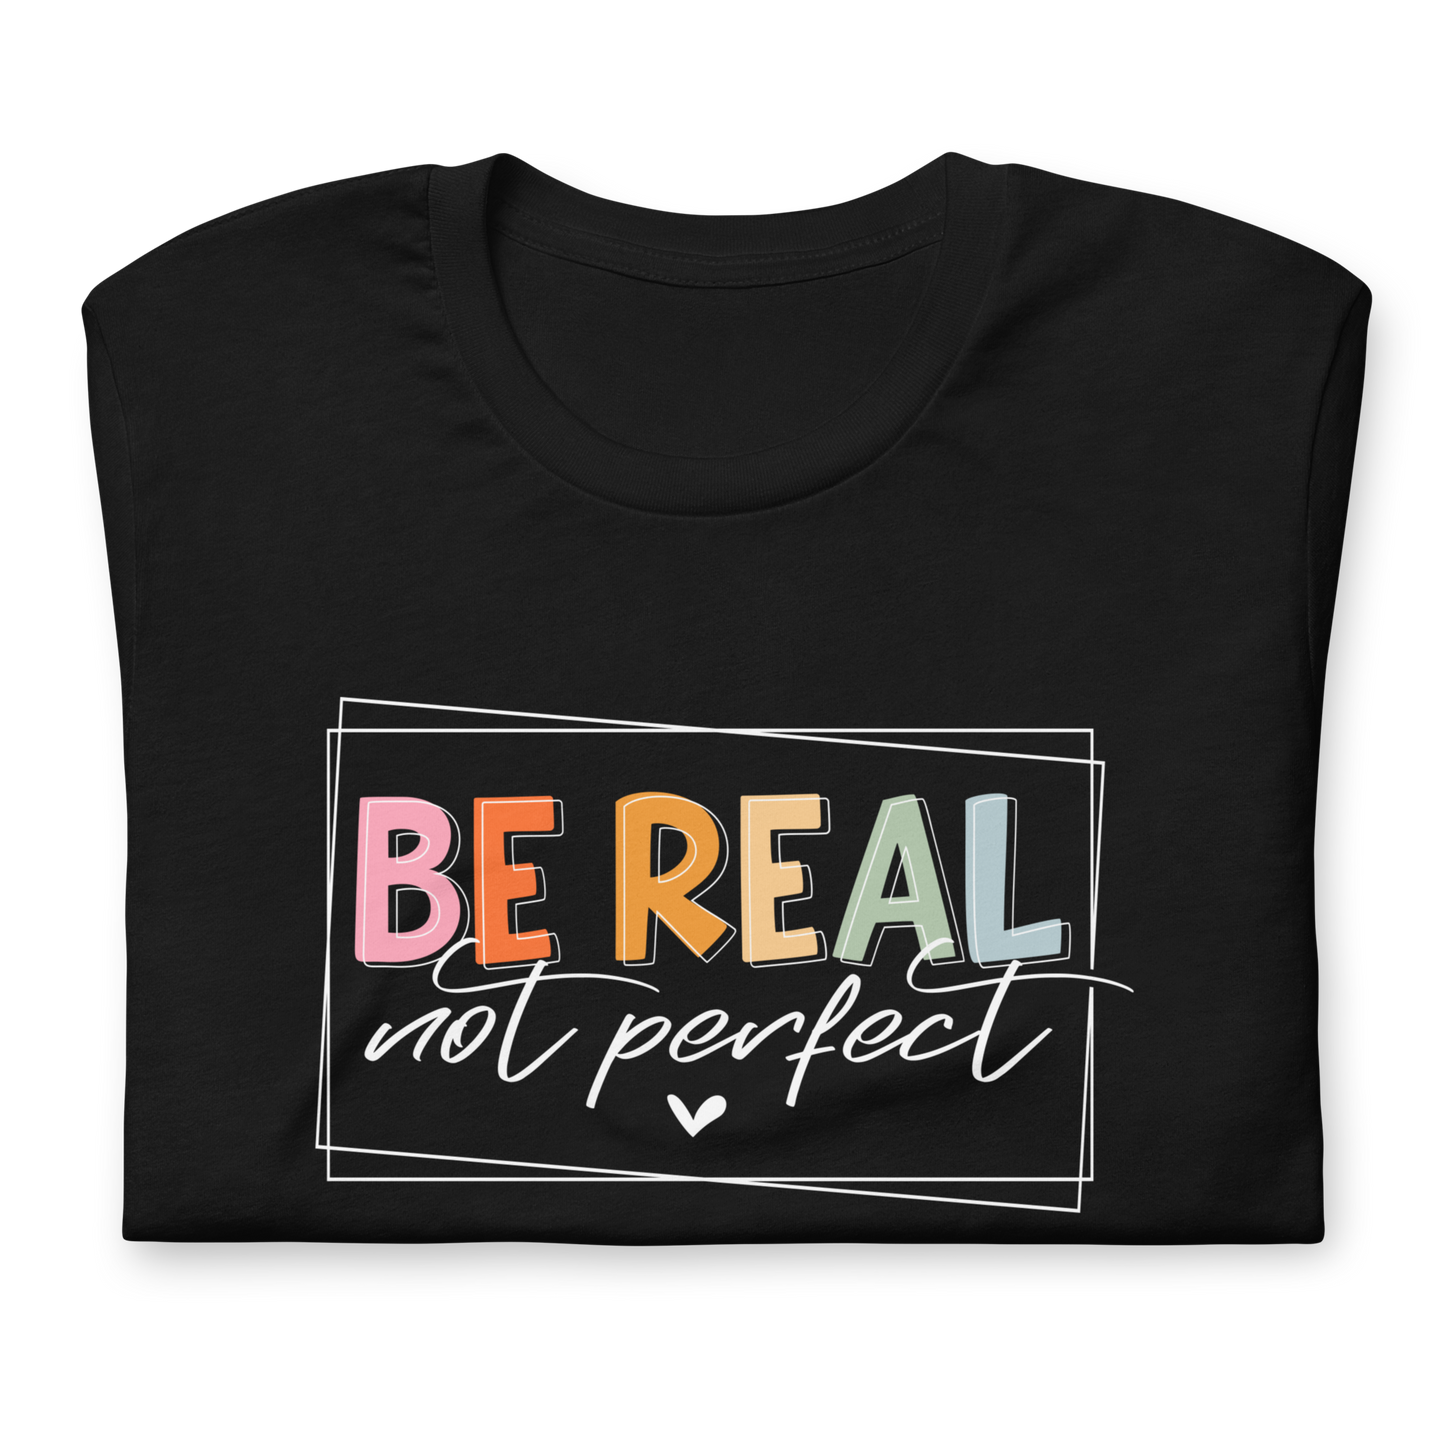 Unisex marškinėliai: "Be real, not perfect"